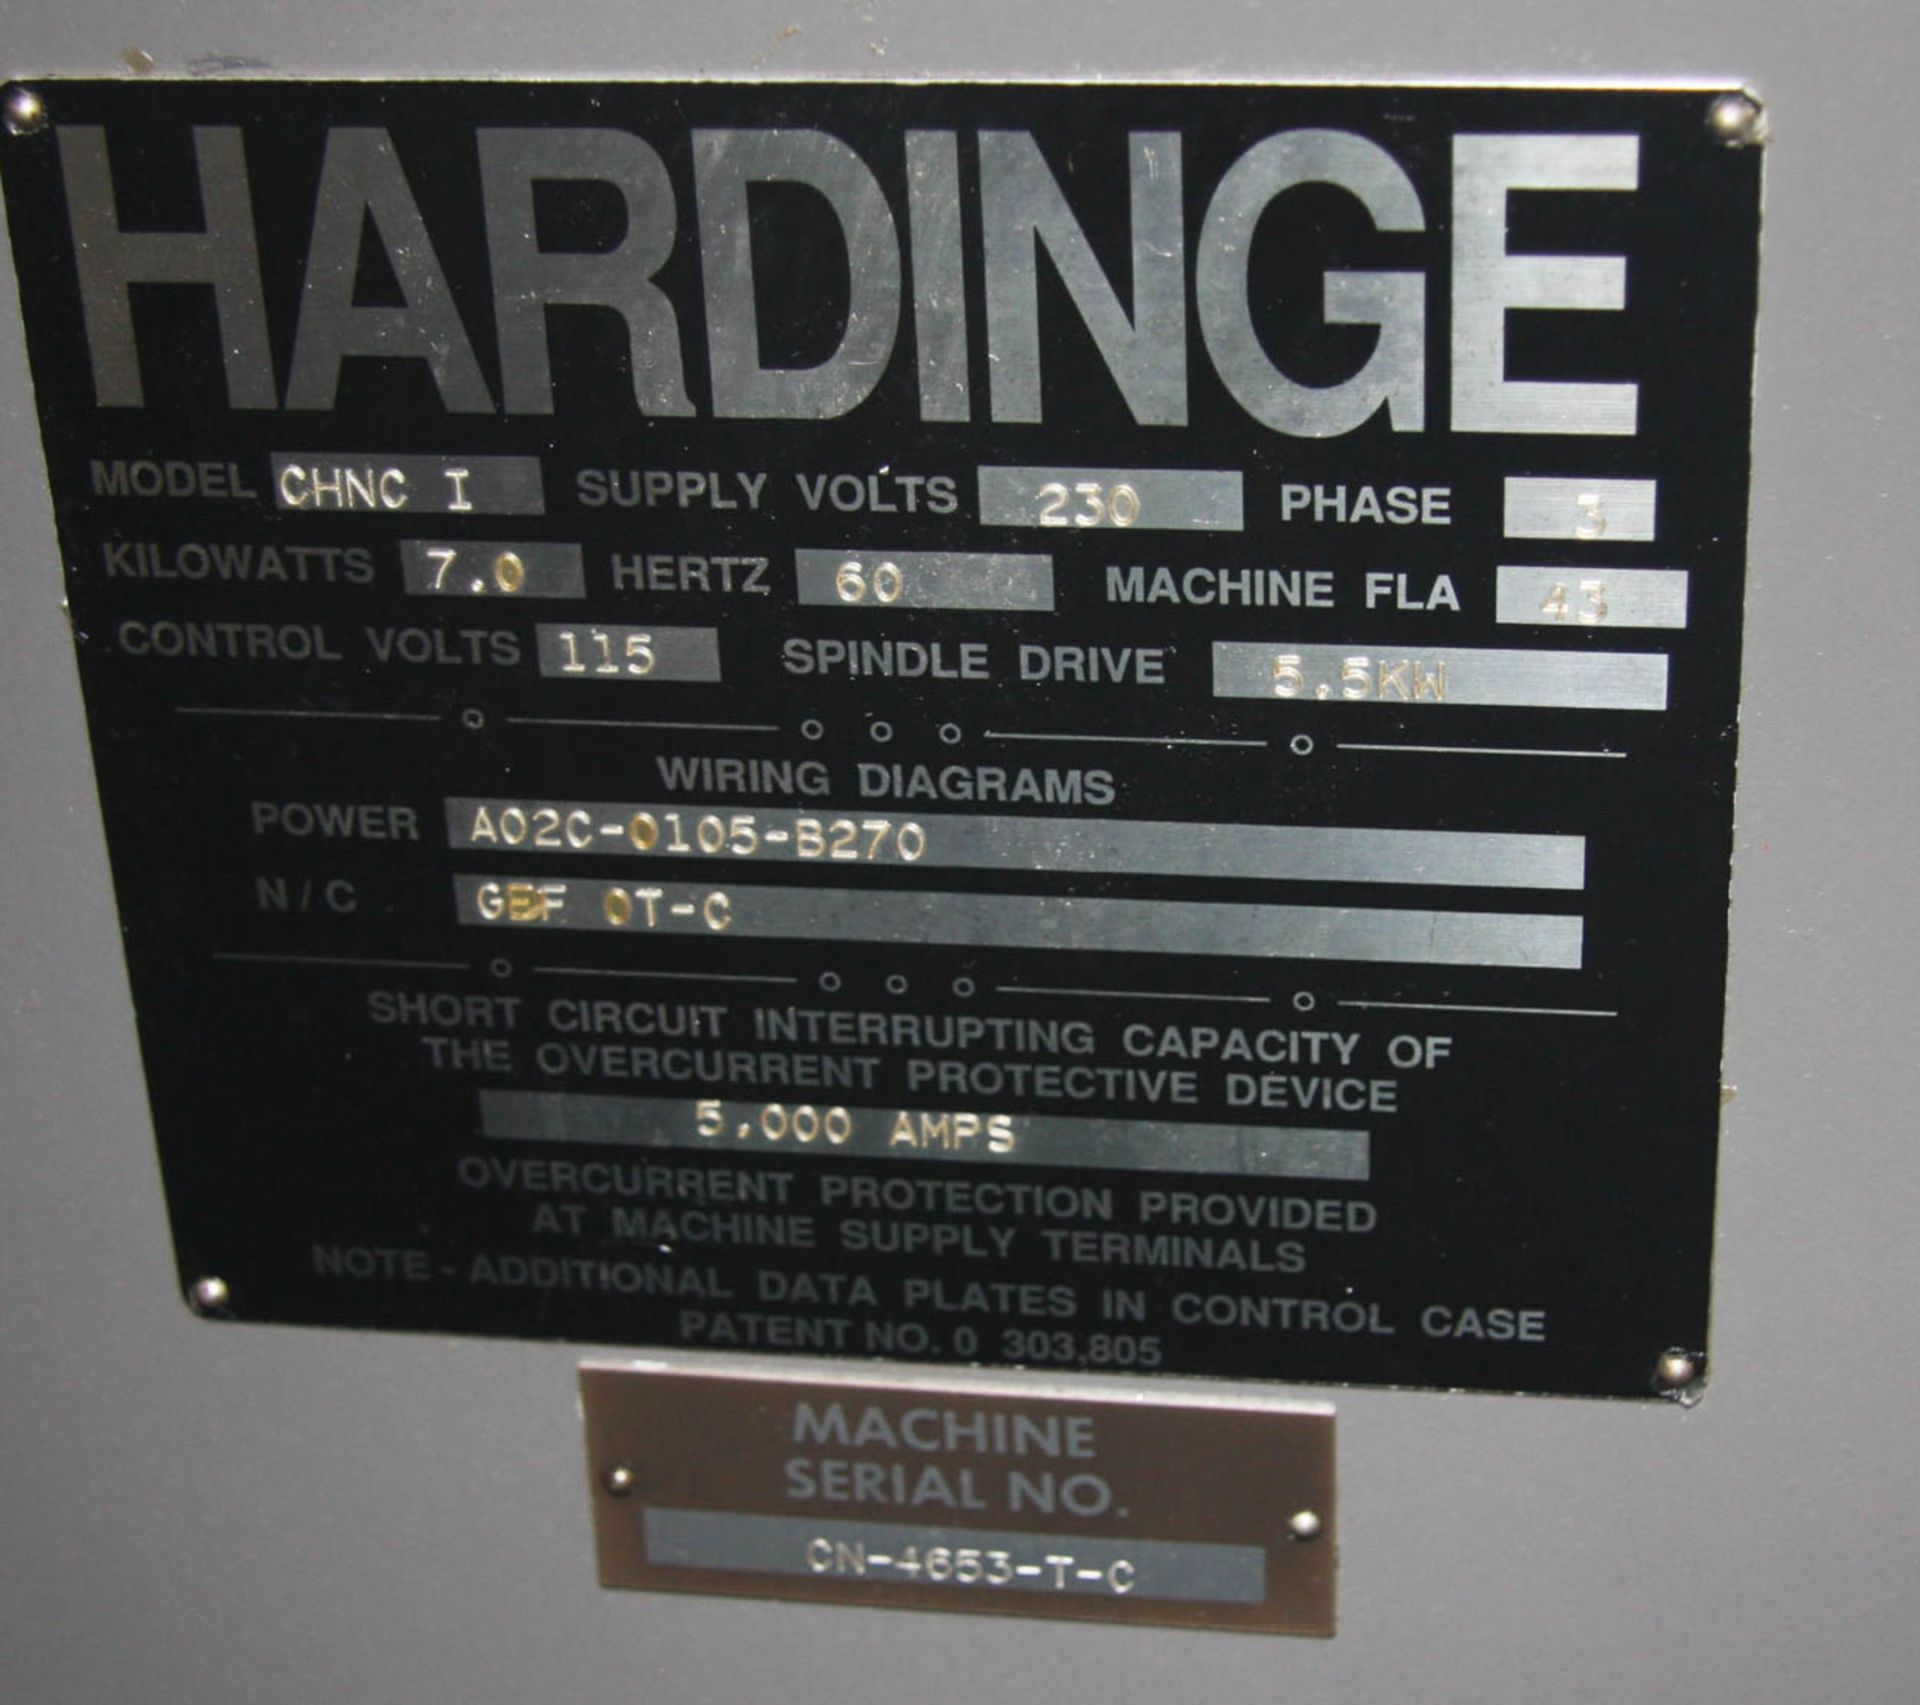 Hardinge CHNC-I CNC Chucker, GE/Fanuc O-T Control, Collet Nose, Turret, Harmatic Six/Sameca QS4 Barf - Image 3 of 13